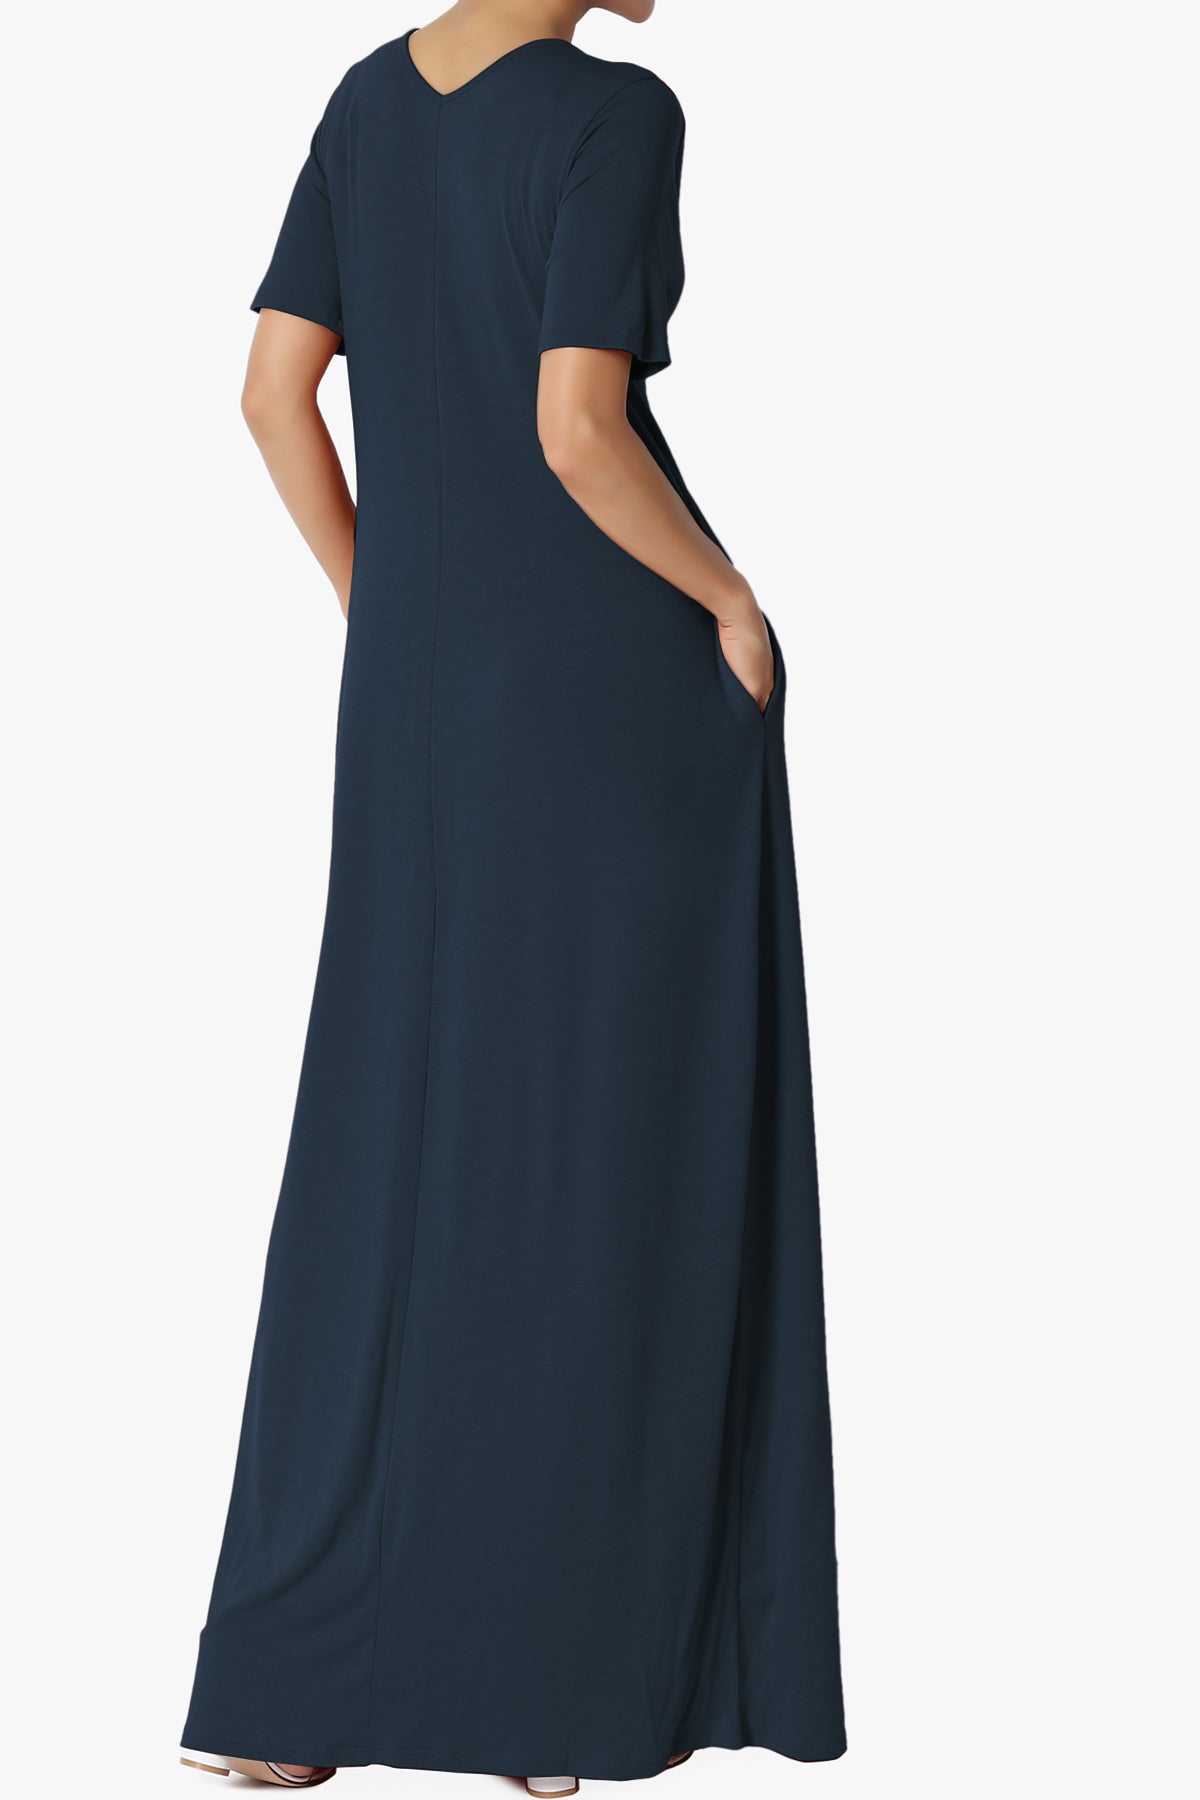 Load image into Gallery viewer, Vina Pocket Oversized Maxi Dress DARK NAVY_4
